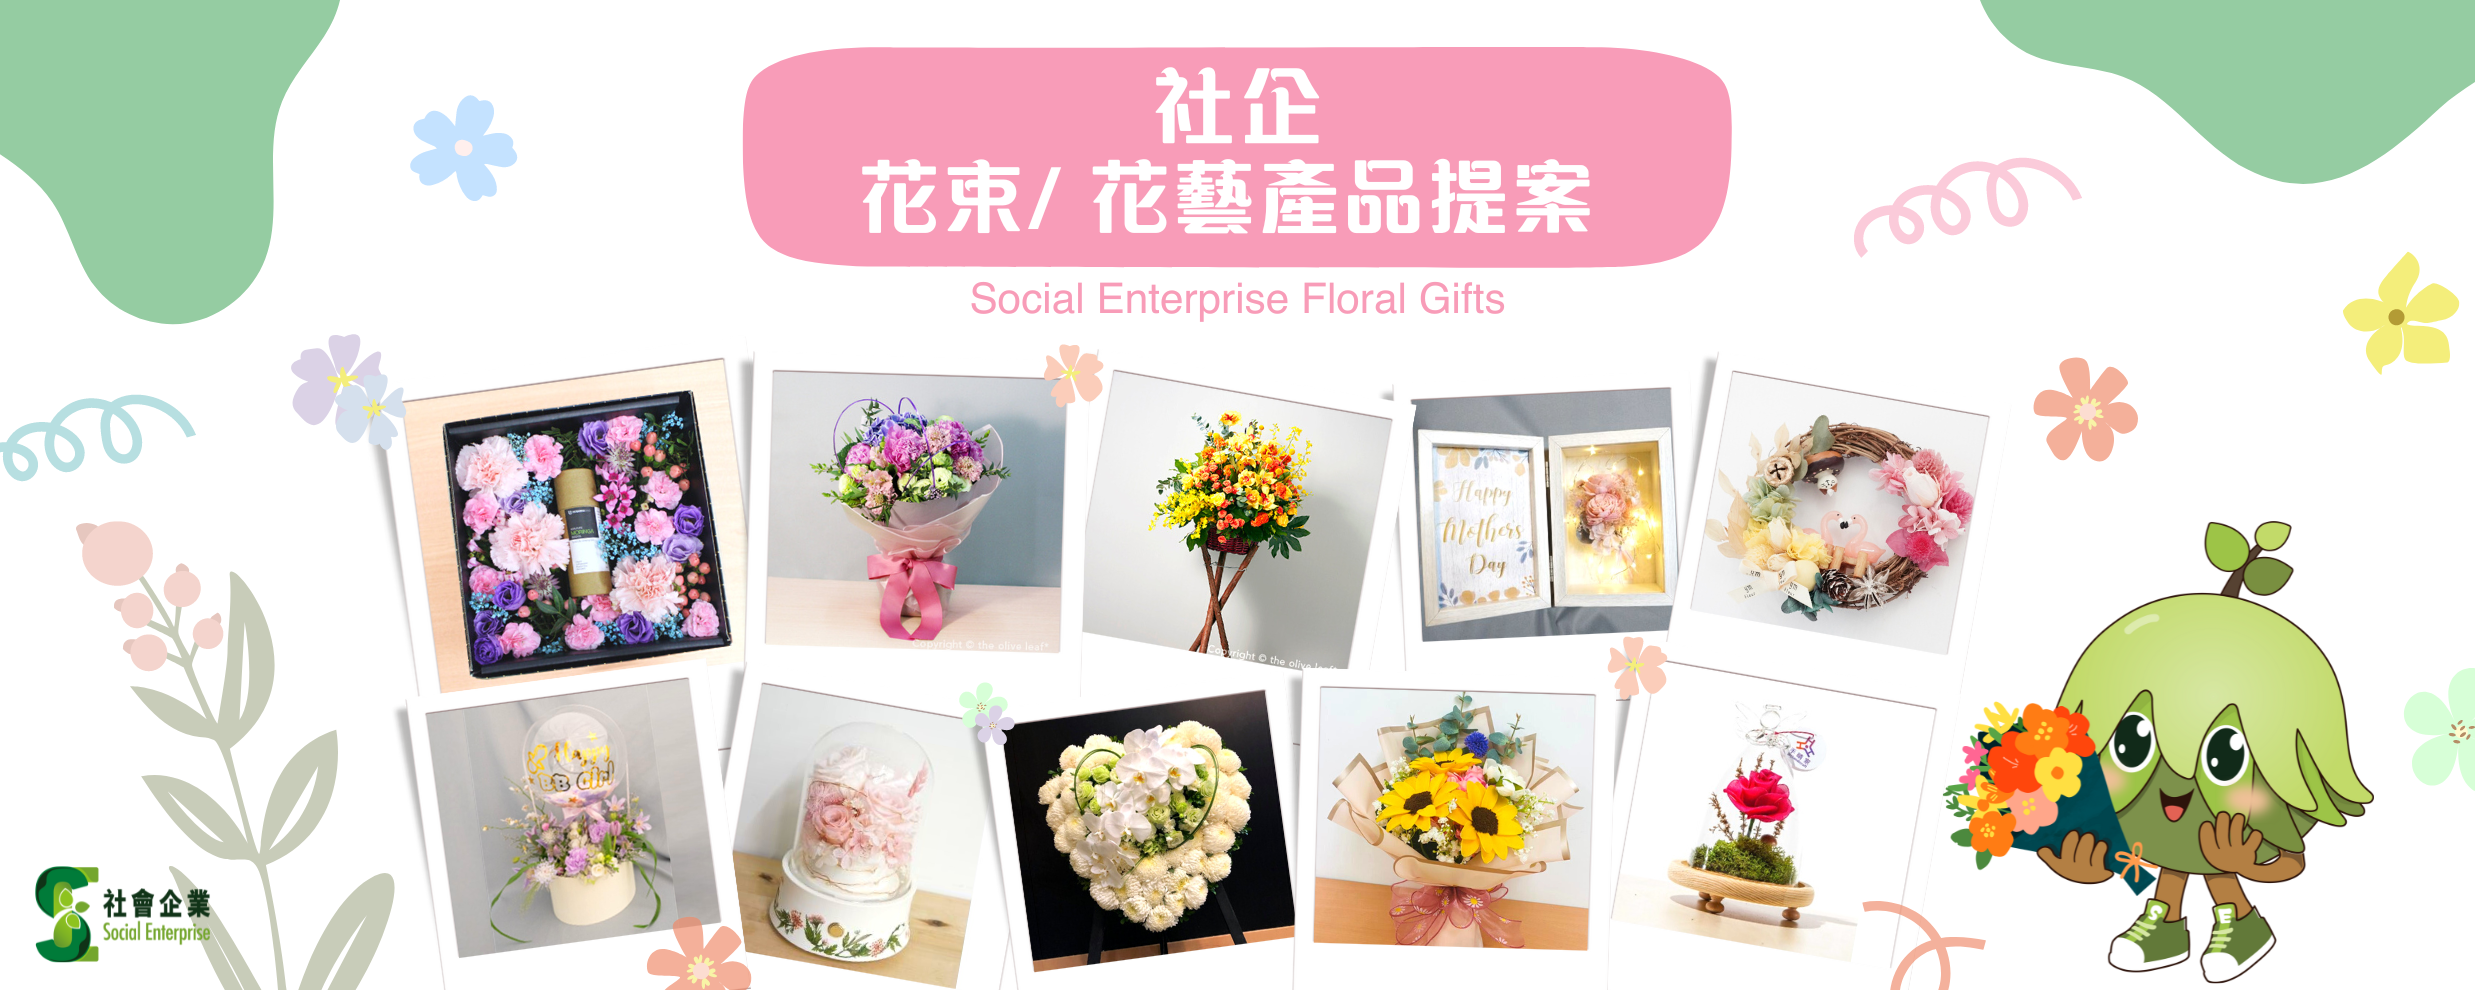 Social Enterprise Floral Gifts